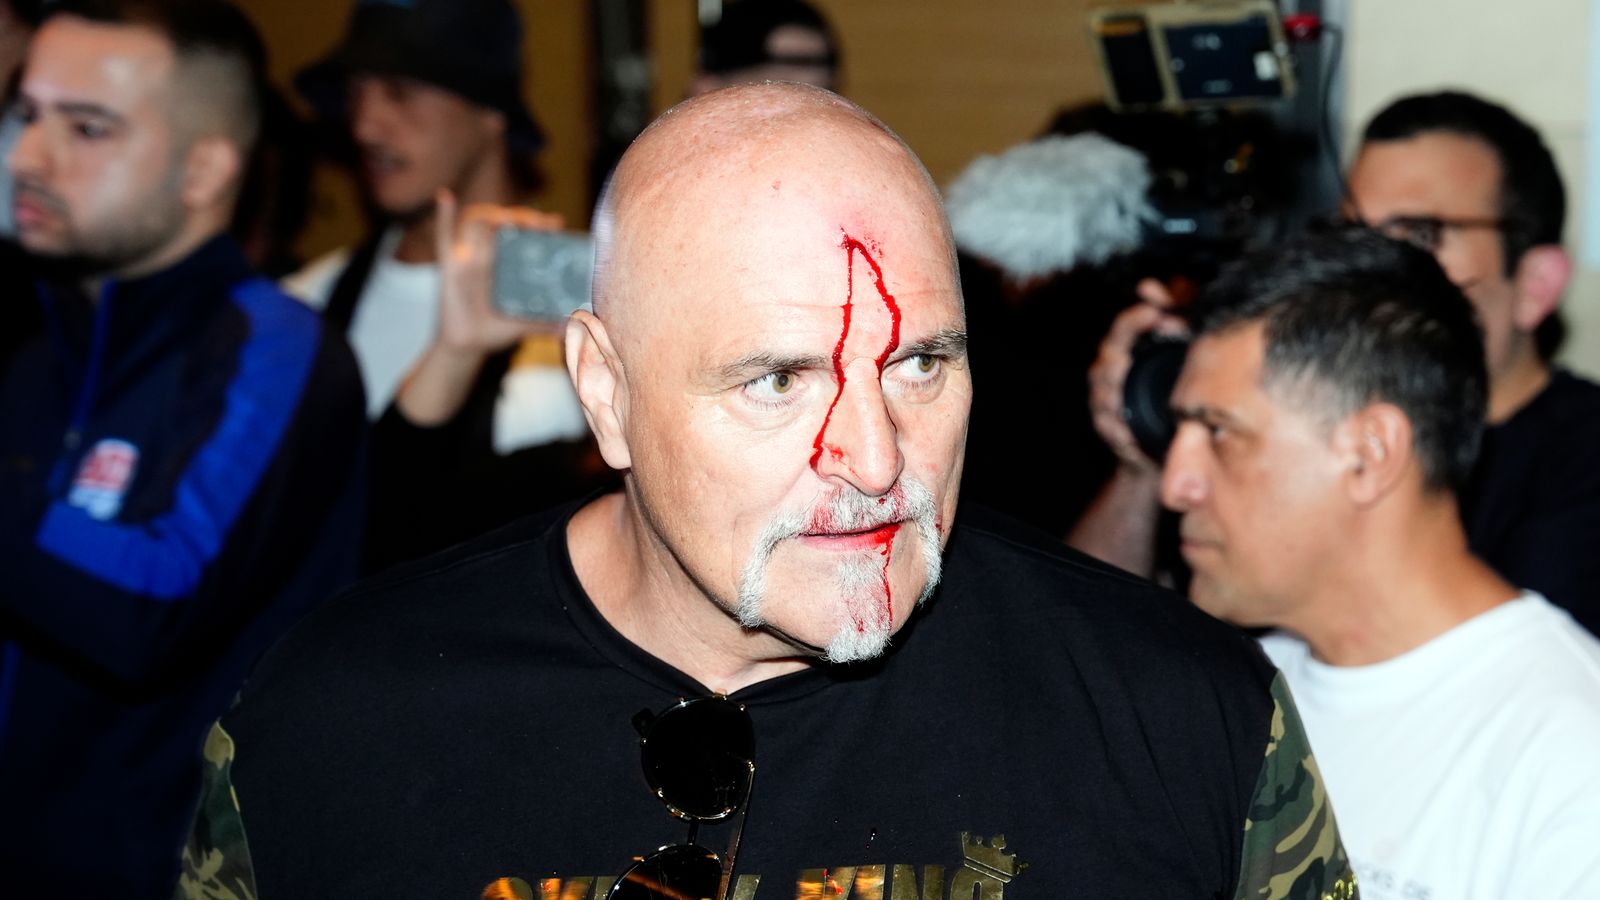 Tyson Fury's dad headbutts member of Oleksandr Usyk's entourage at media day fracas